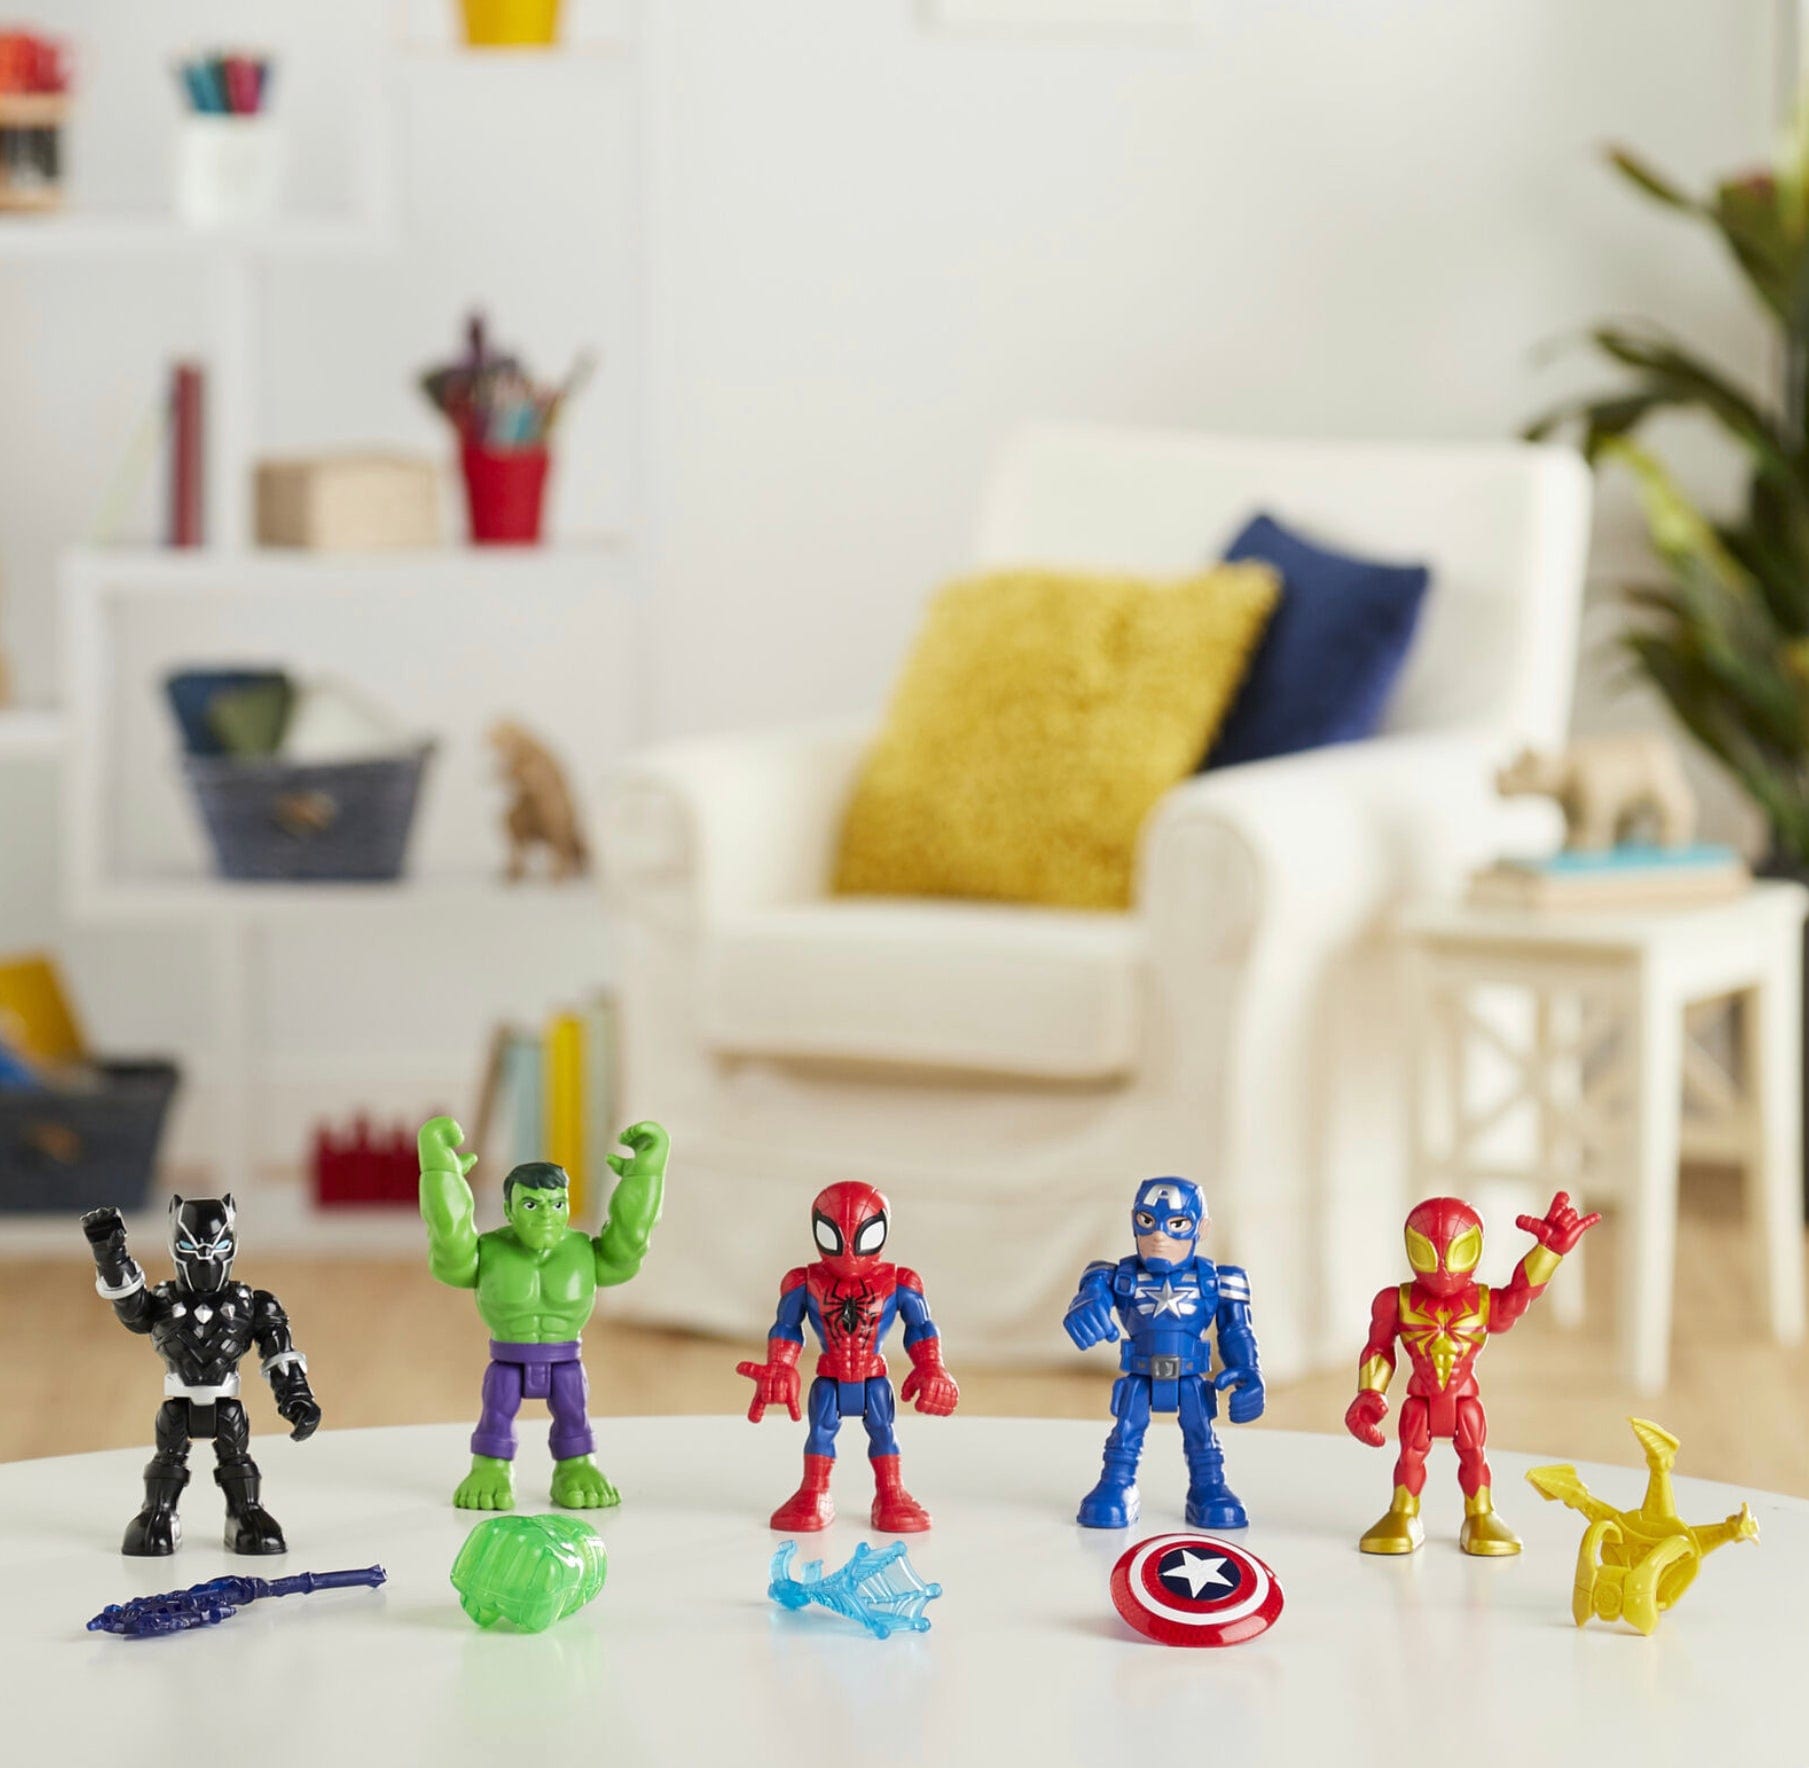 Marvel Super Hero Adventures toys, 12cm Iron Man Action Figure & Accessory